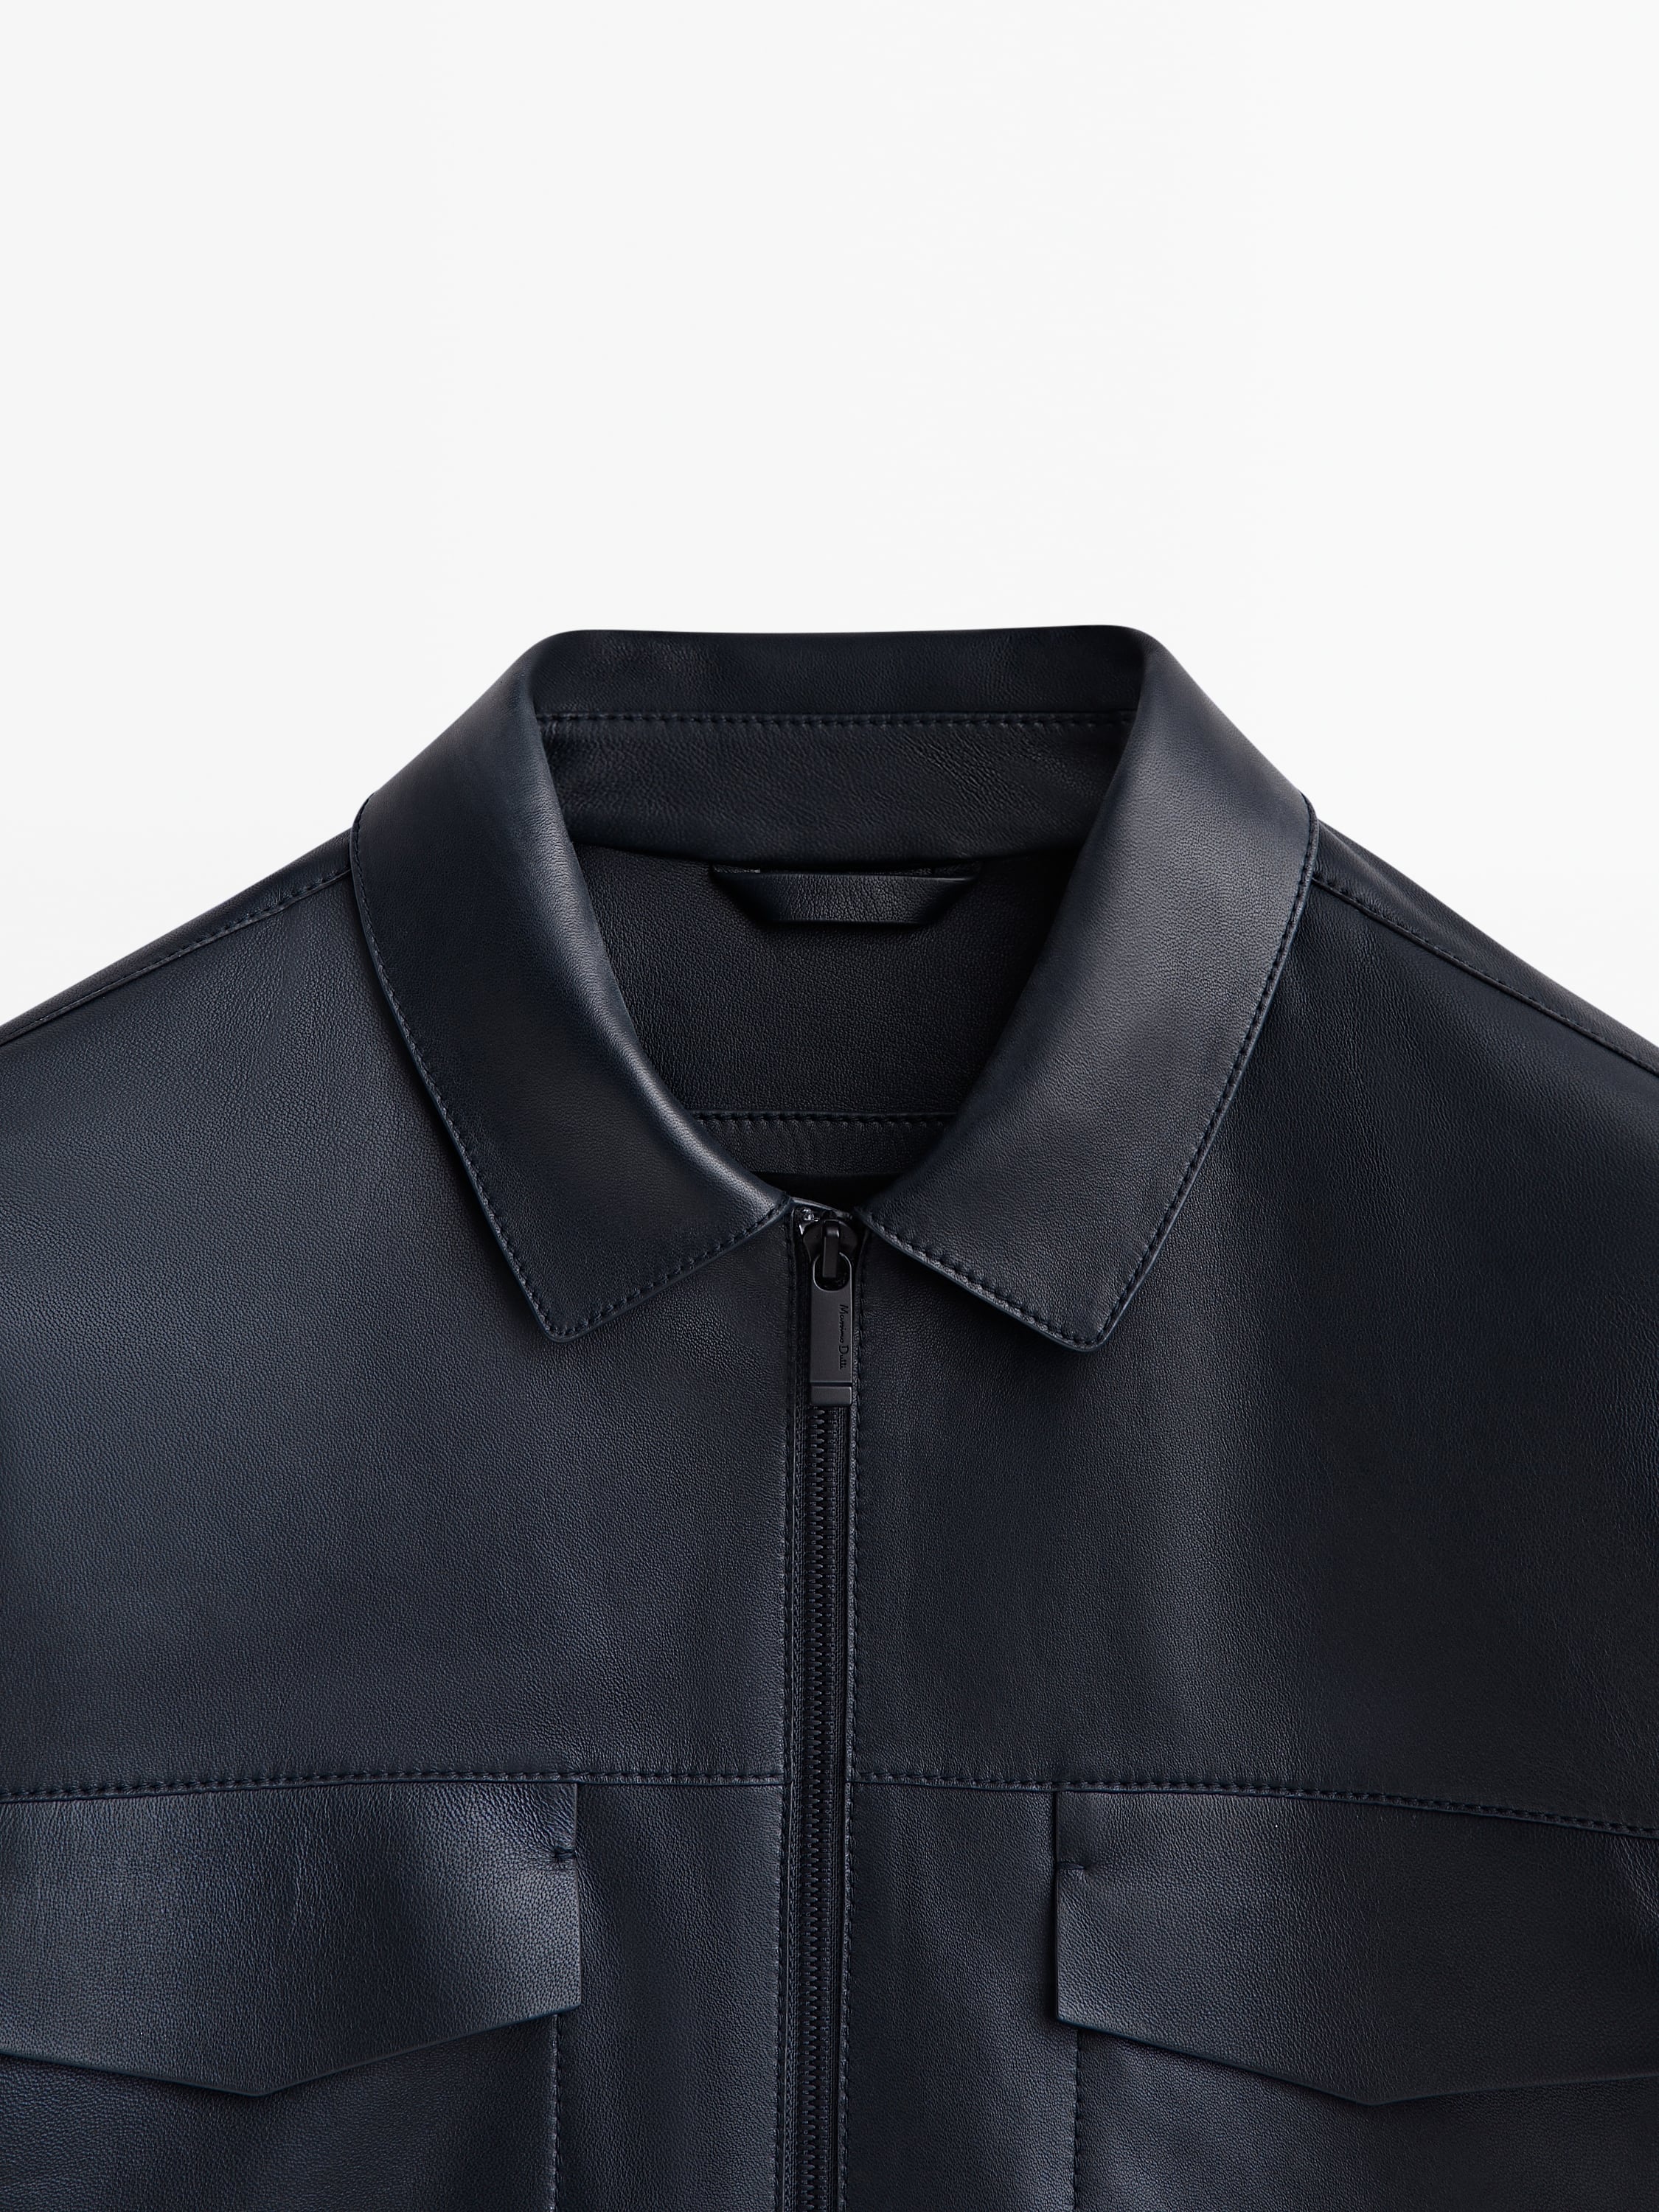 Zara Nappa leather trucker jacket - Limited Edition | Mall of America®